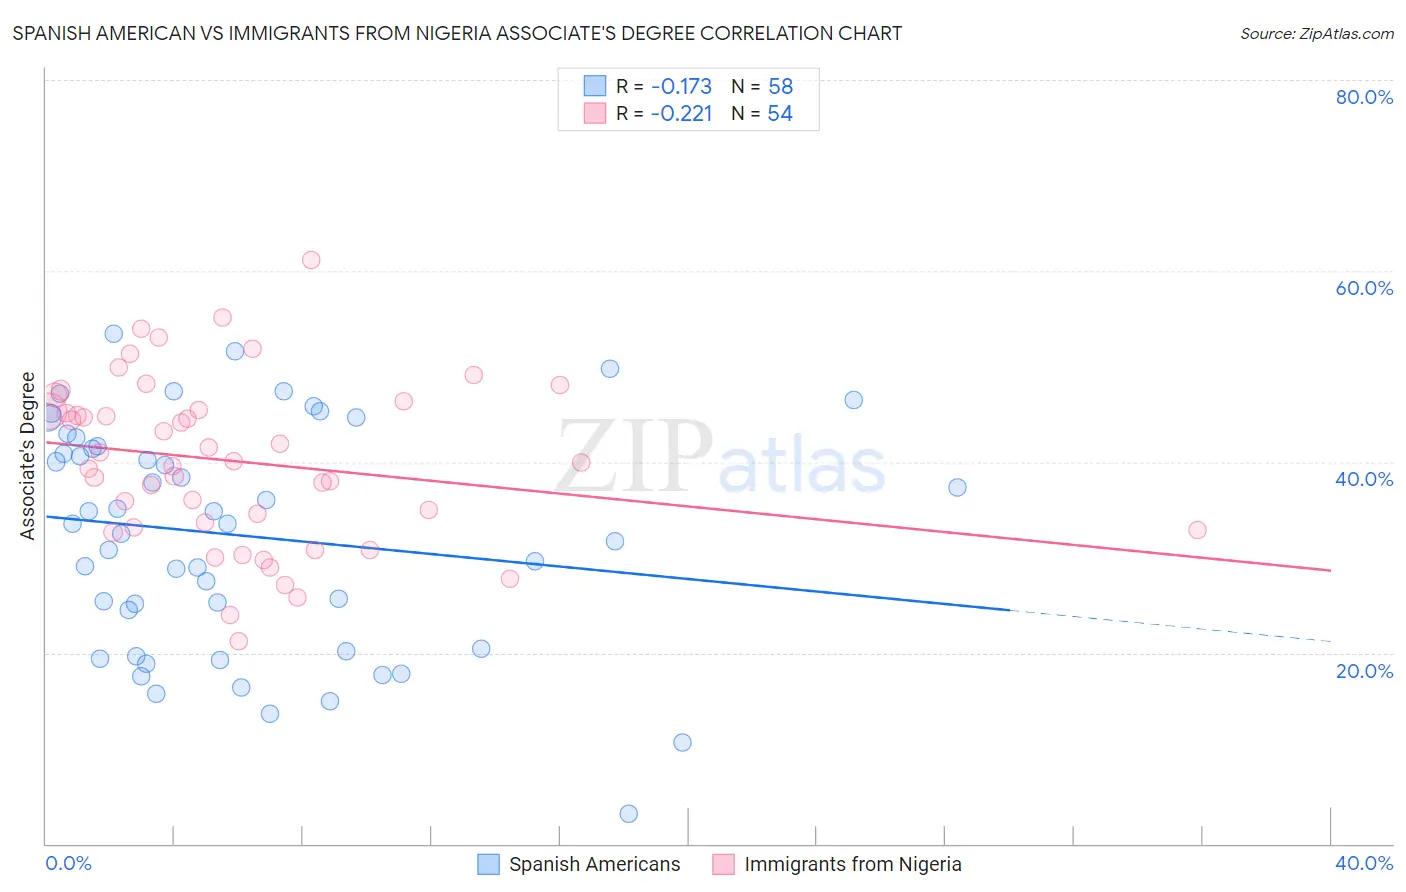 Spanish American vs Immigrants from Nigeria Associate's Degree